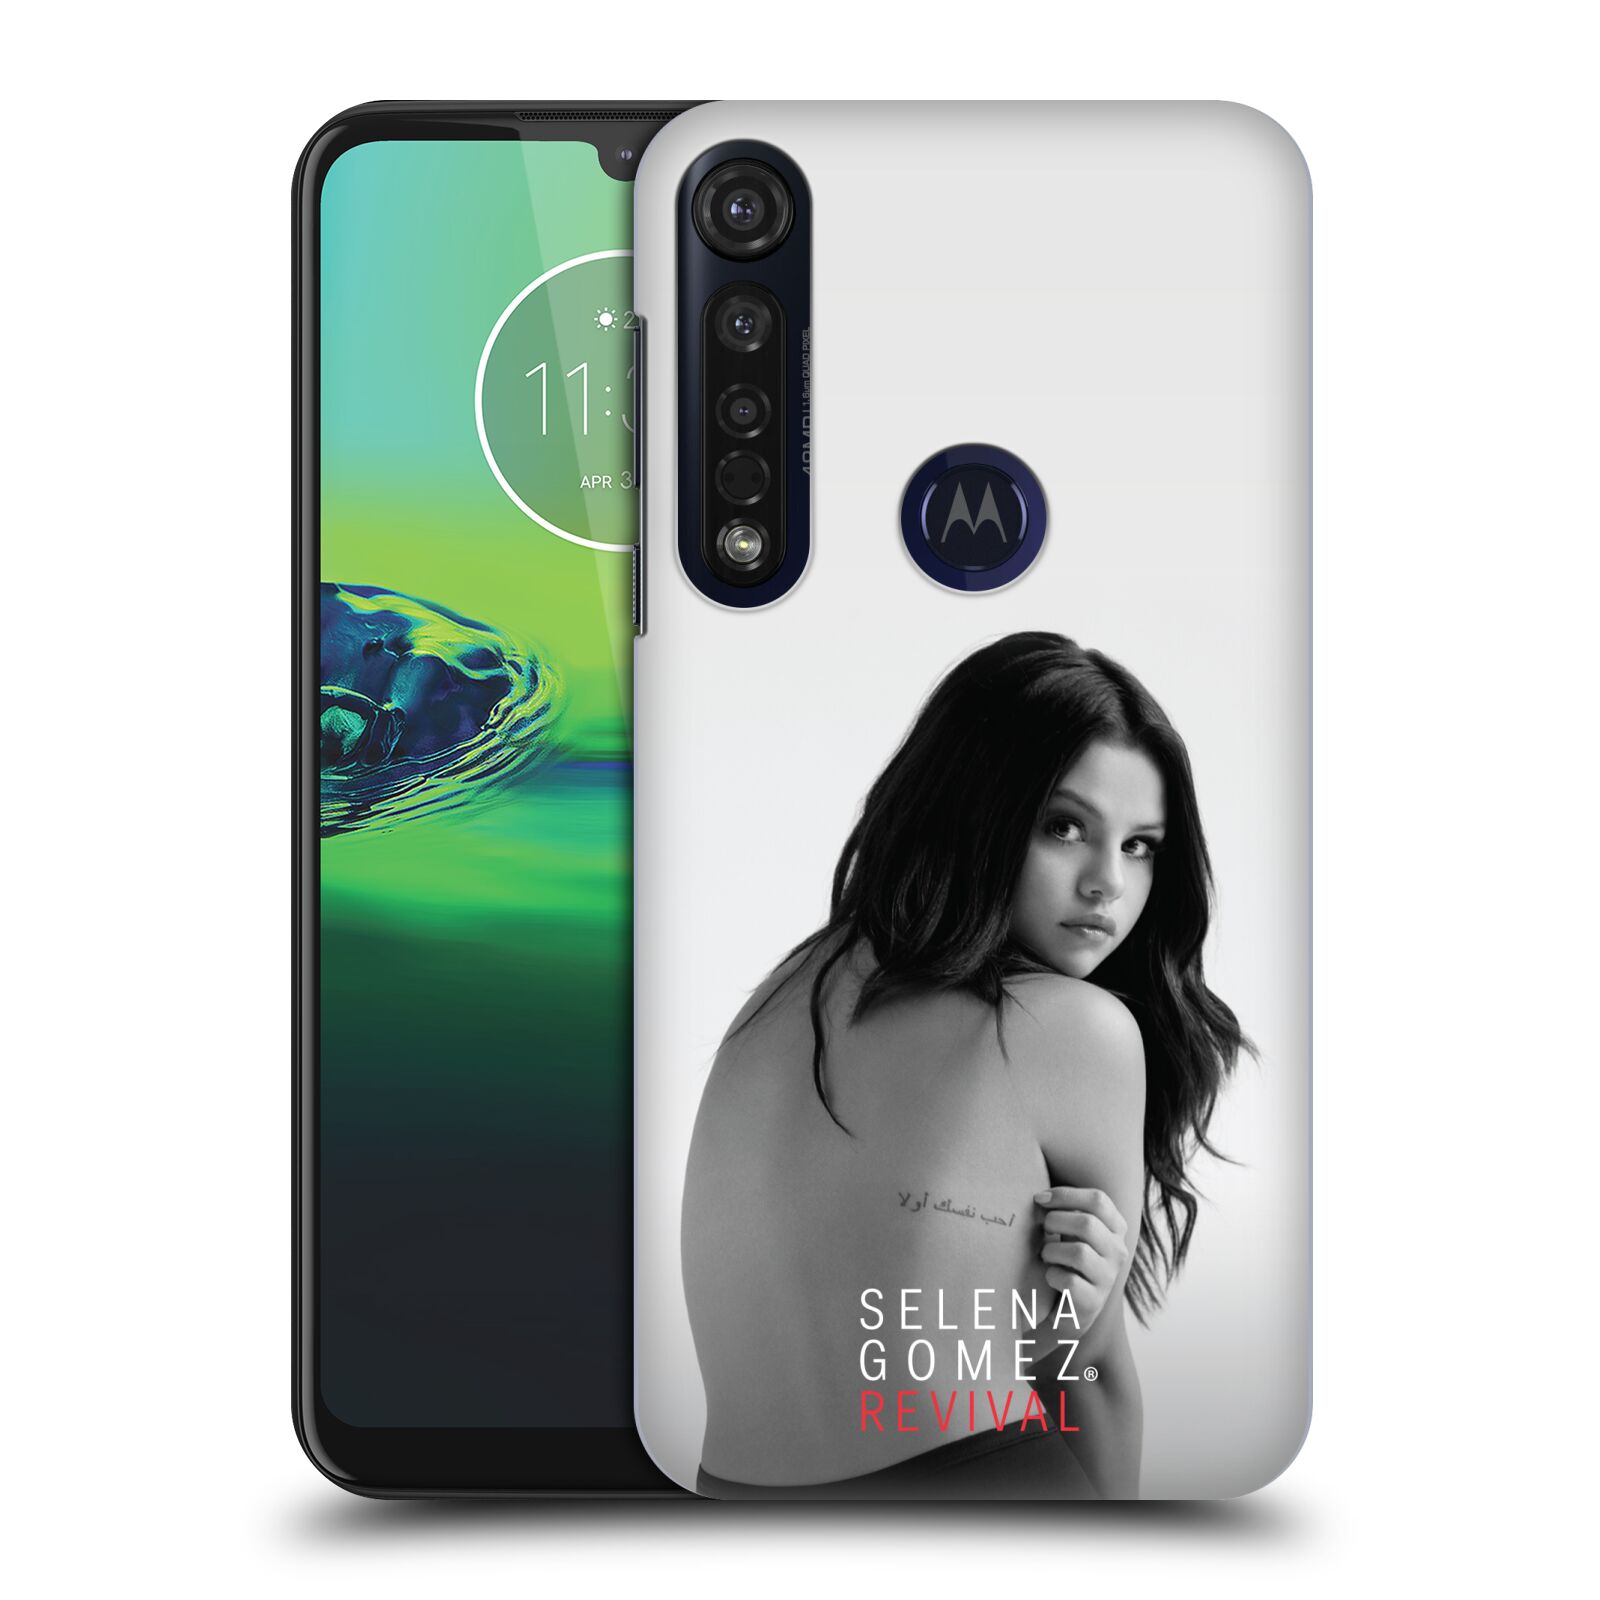 Pouzdro na mobil Motorola Moto G8 PLUS - HEAD CASE - Zpěvačka Selena Gomez foto Revival zadní strana